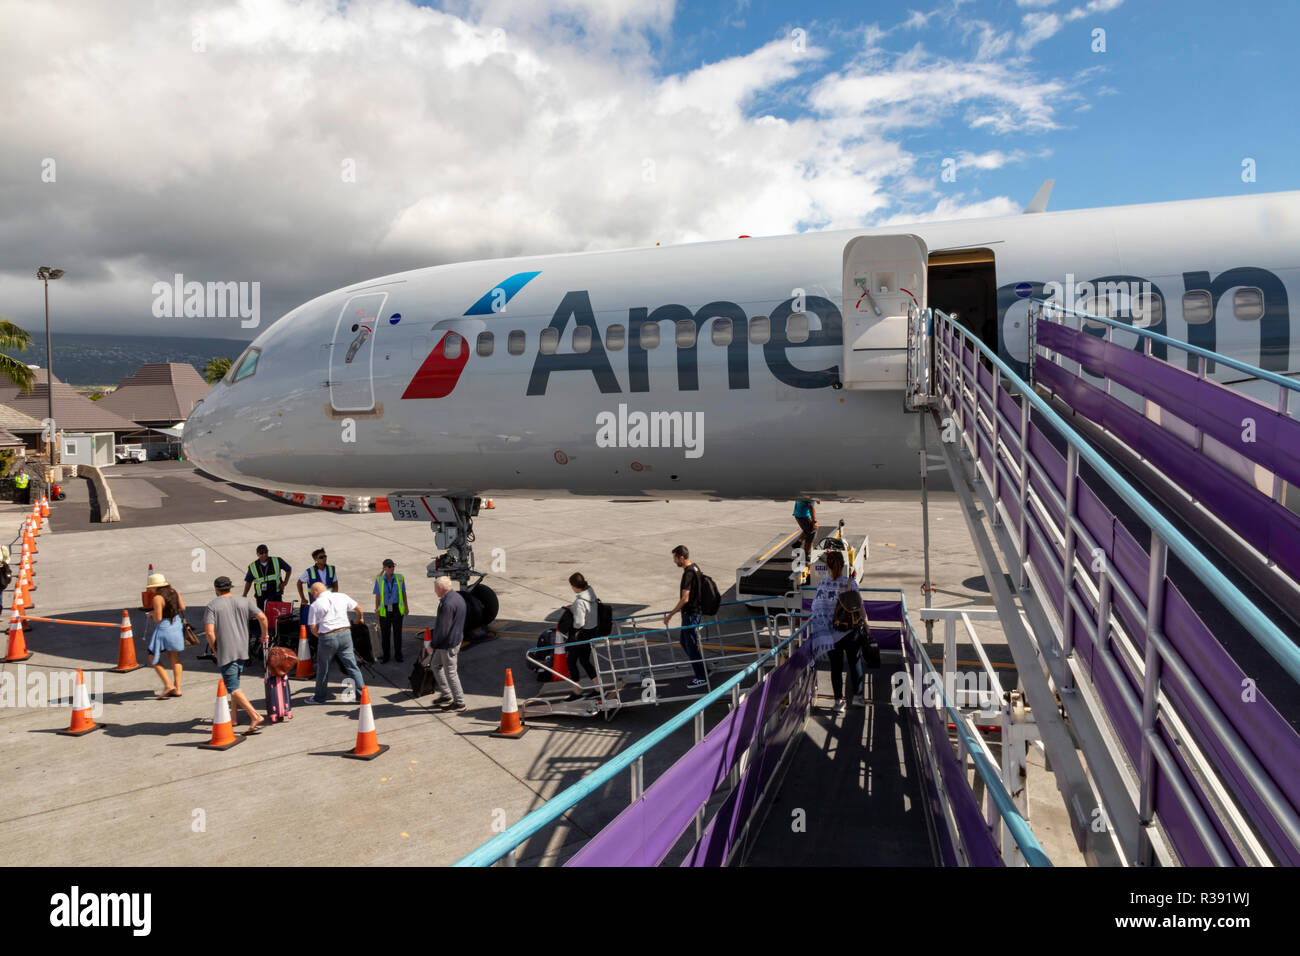 Kailua-Kona, Hawaii - Passengers leaving an American Airlines plane at Kona International Airport on Hawaii's Big Island. Stock Photo